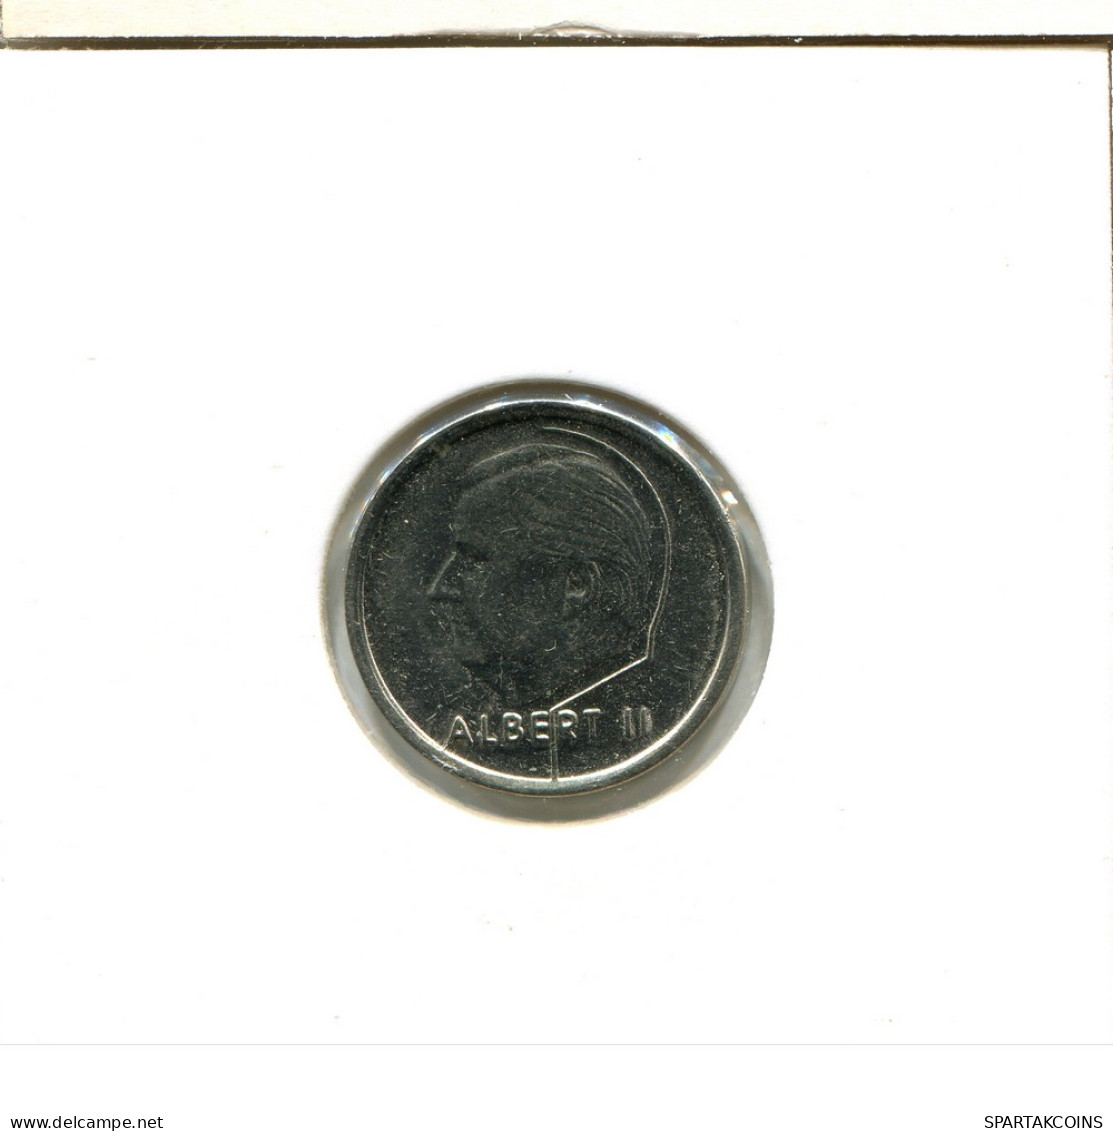 1 FRANC 1995 DUTCH Text BELGIUM Coin #AU108.U - 1 Frank